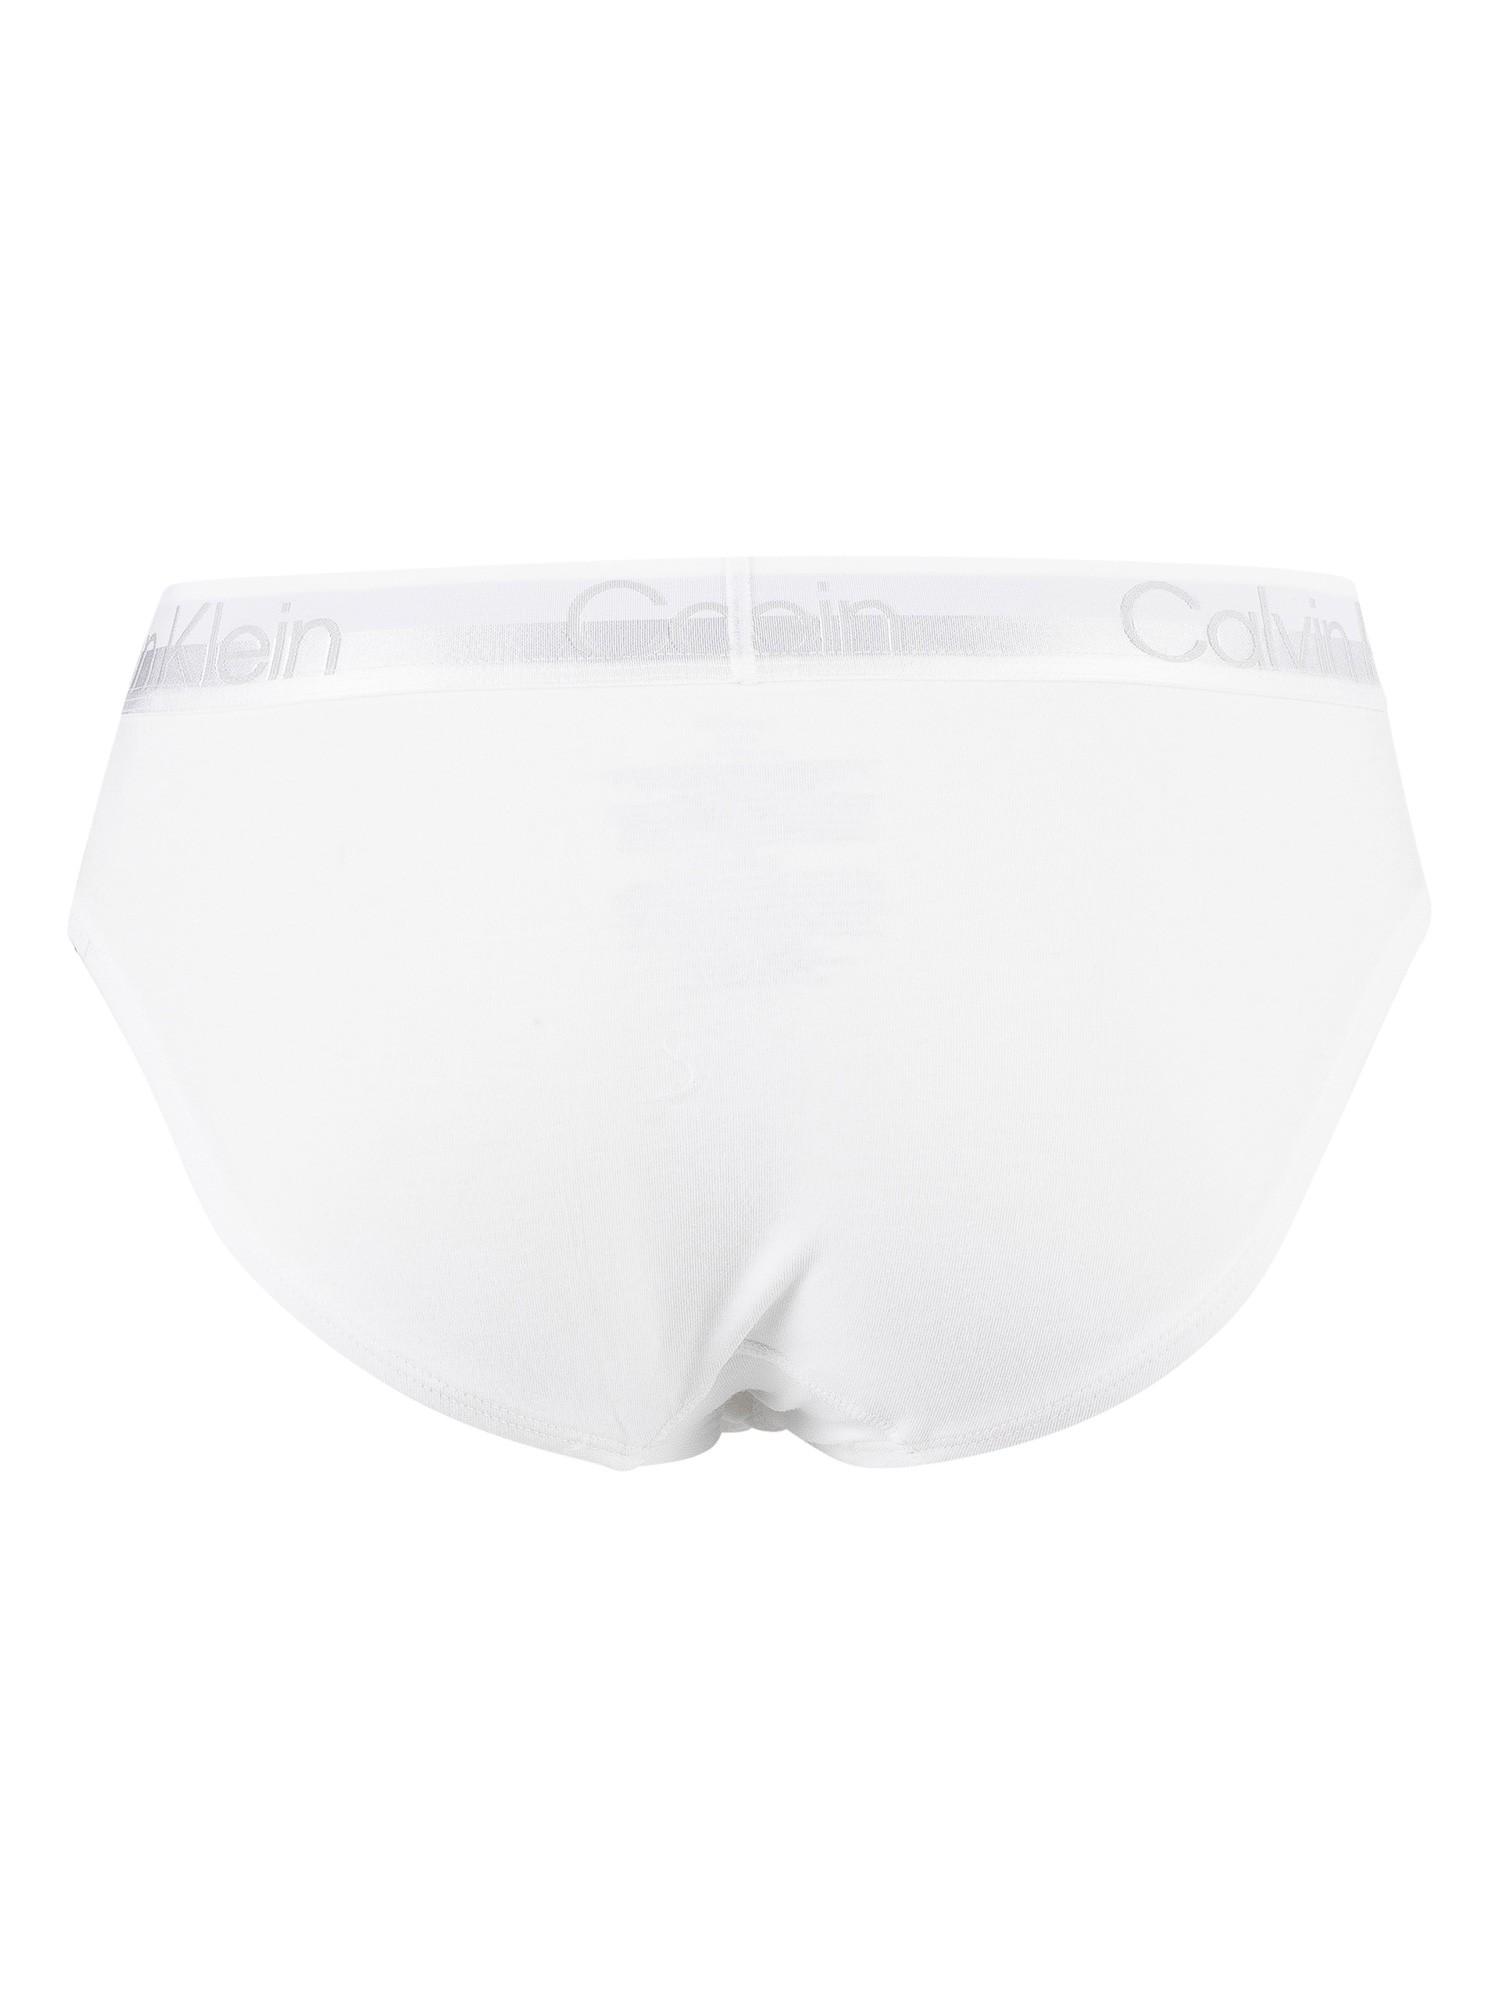 Watson's - Men's 100% cotton underwear, 3 pack hip briefs, white, small  (S). Colour: white. Size: s